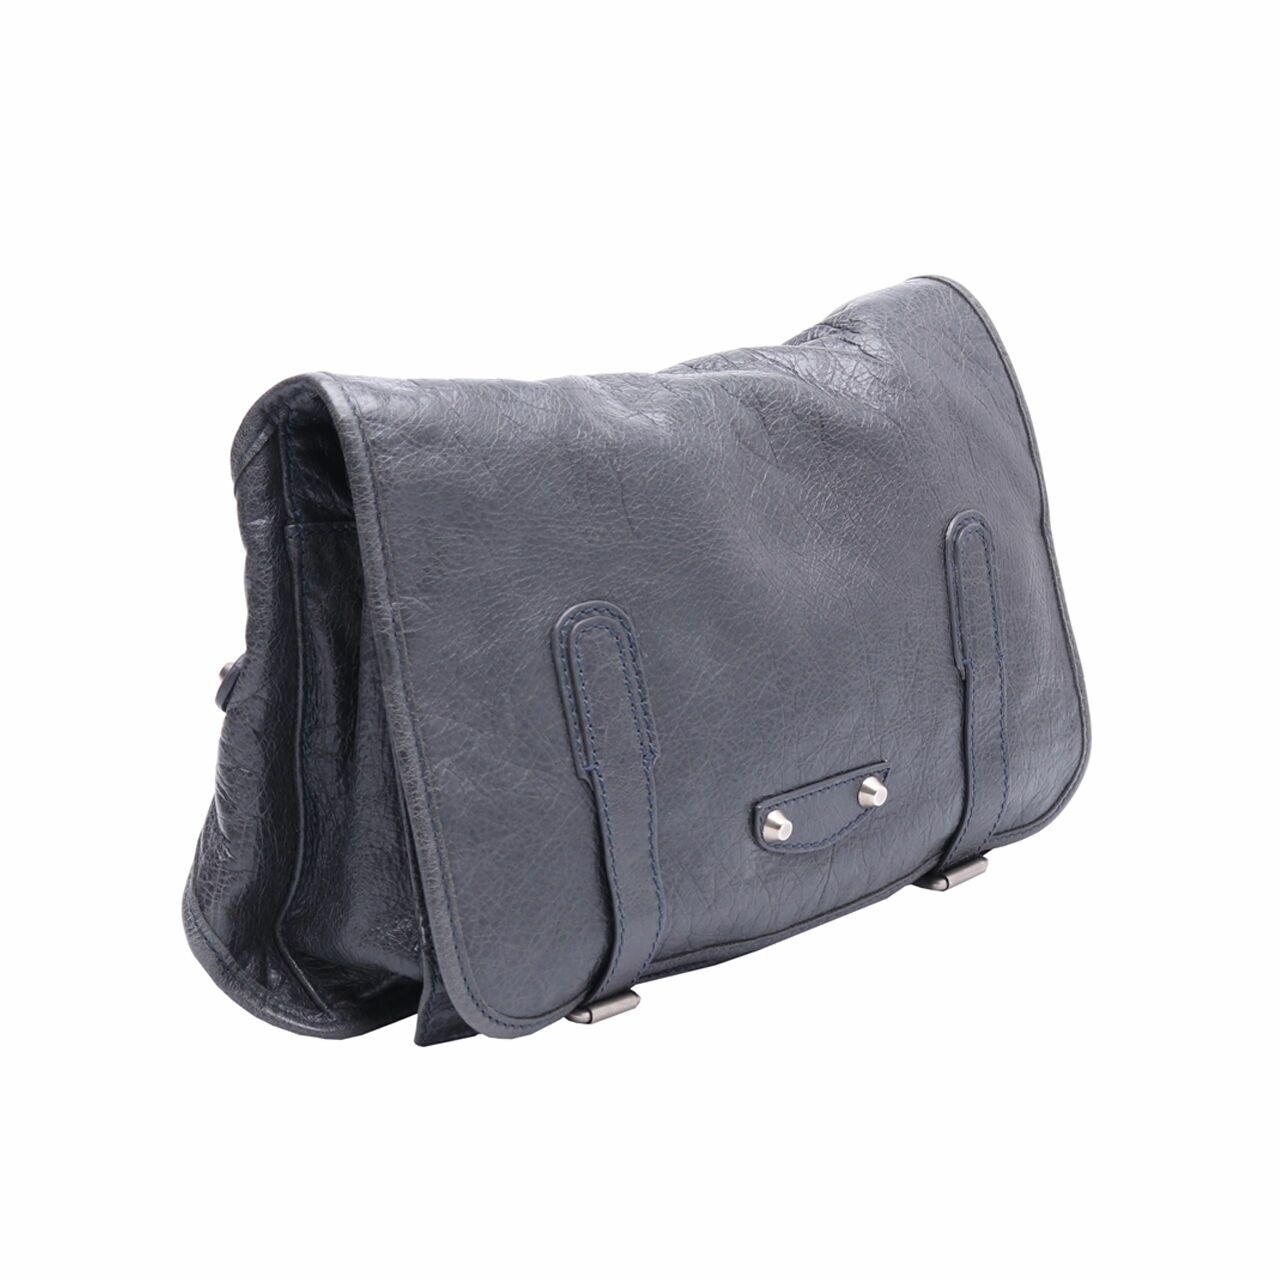 Balenciaga Unisex Leather Fanny Pack Dark Gray Waist Bag